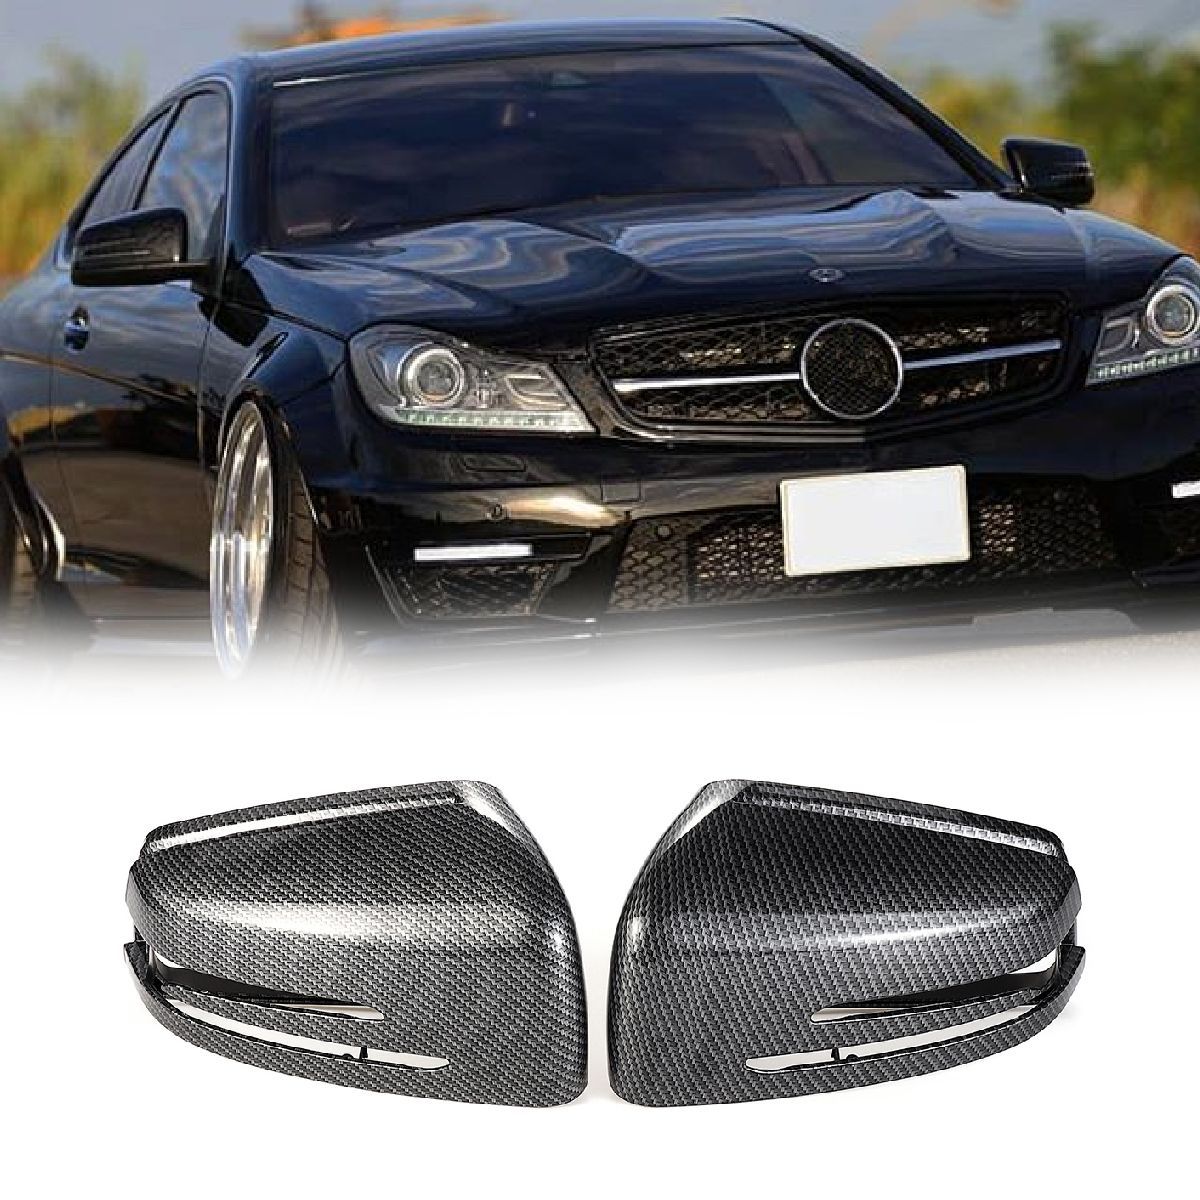 2Pcs-Car-Carbon-Fiber-Rearview-Mirror-Cover-Caps-for-Mercedes-W204-X204-W212-W221-C300-C218-1557226